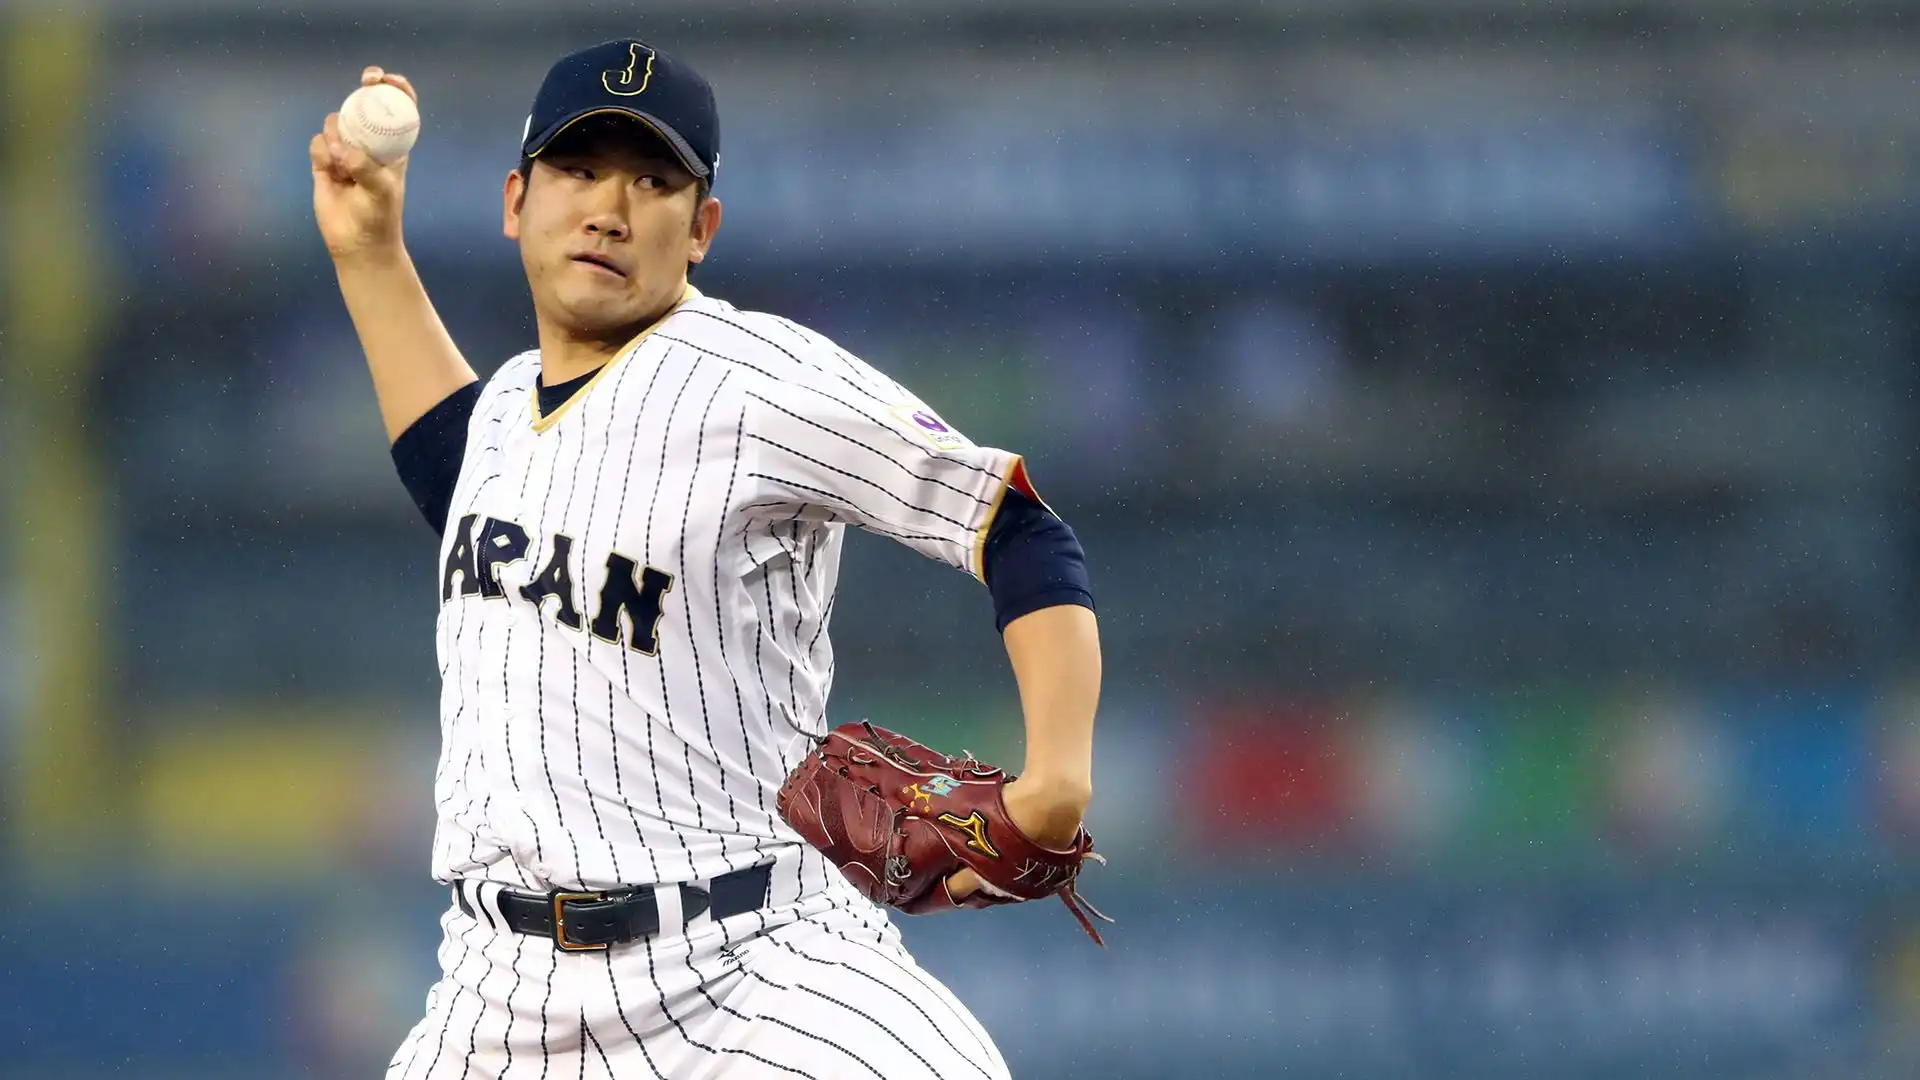 Tomoyuki Sunago (Yomiuri Giants): 6,6 milioni di dollari guadagnati nel 2021